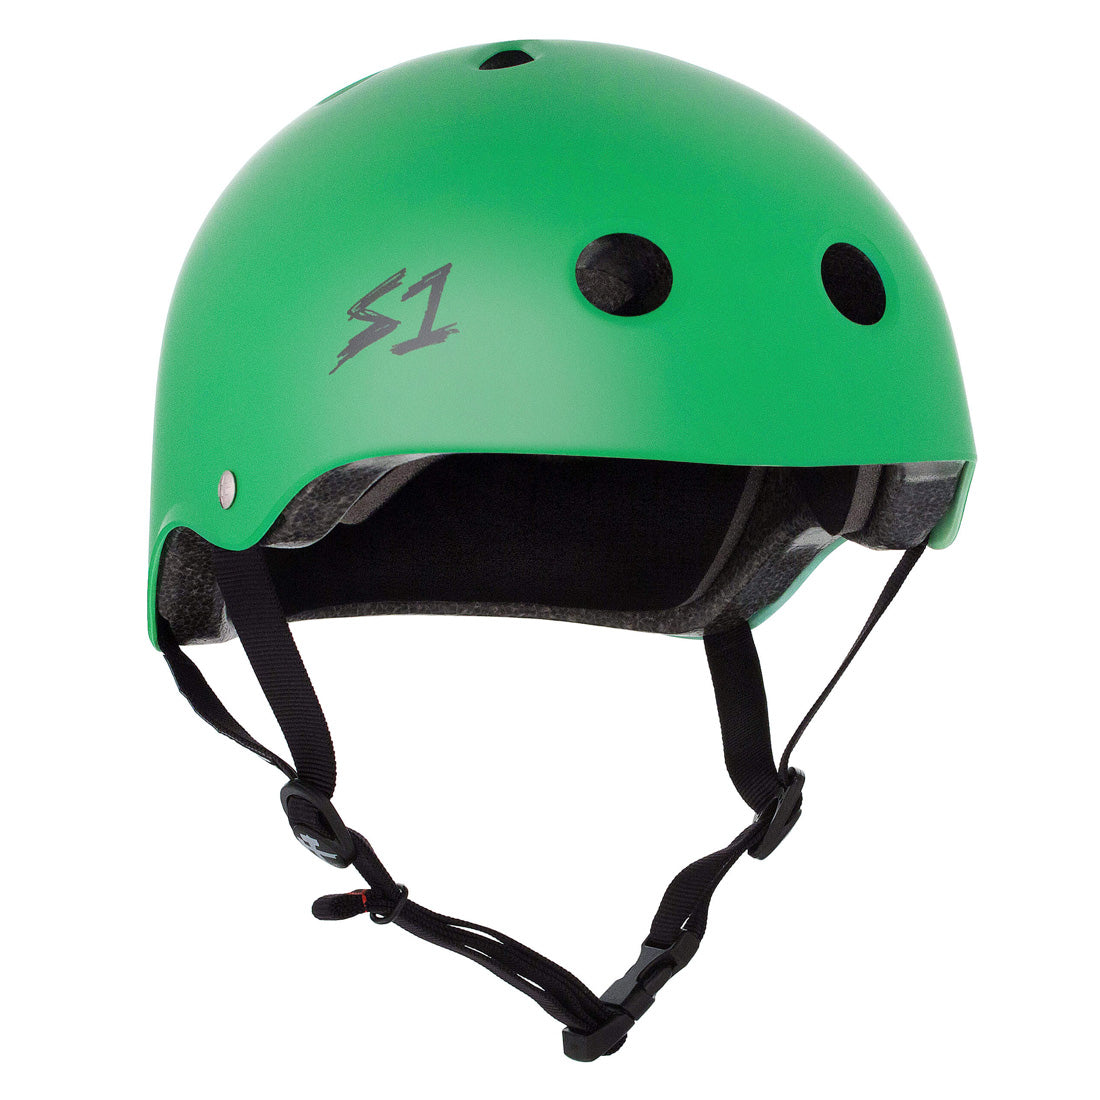 S-One Lifer Helmet - Kelly Green Matte Helmets